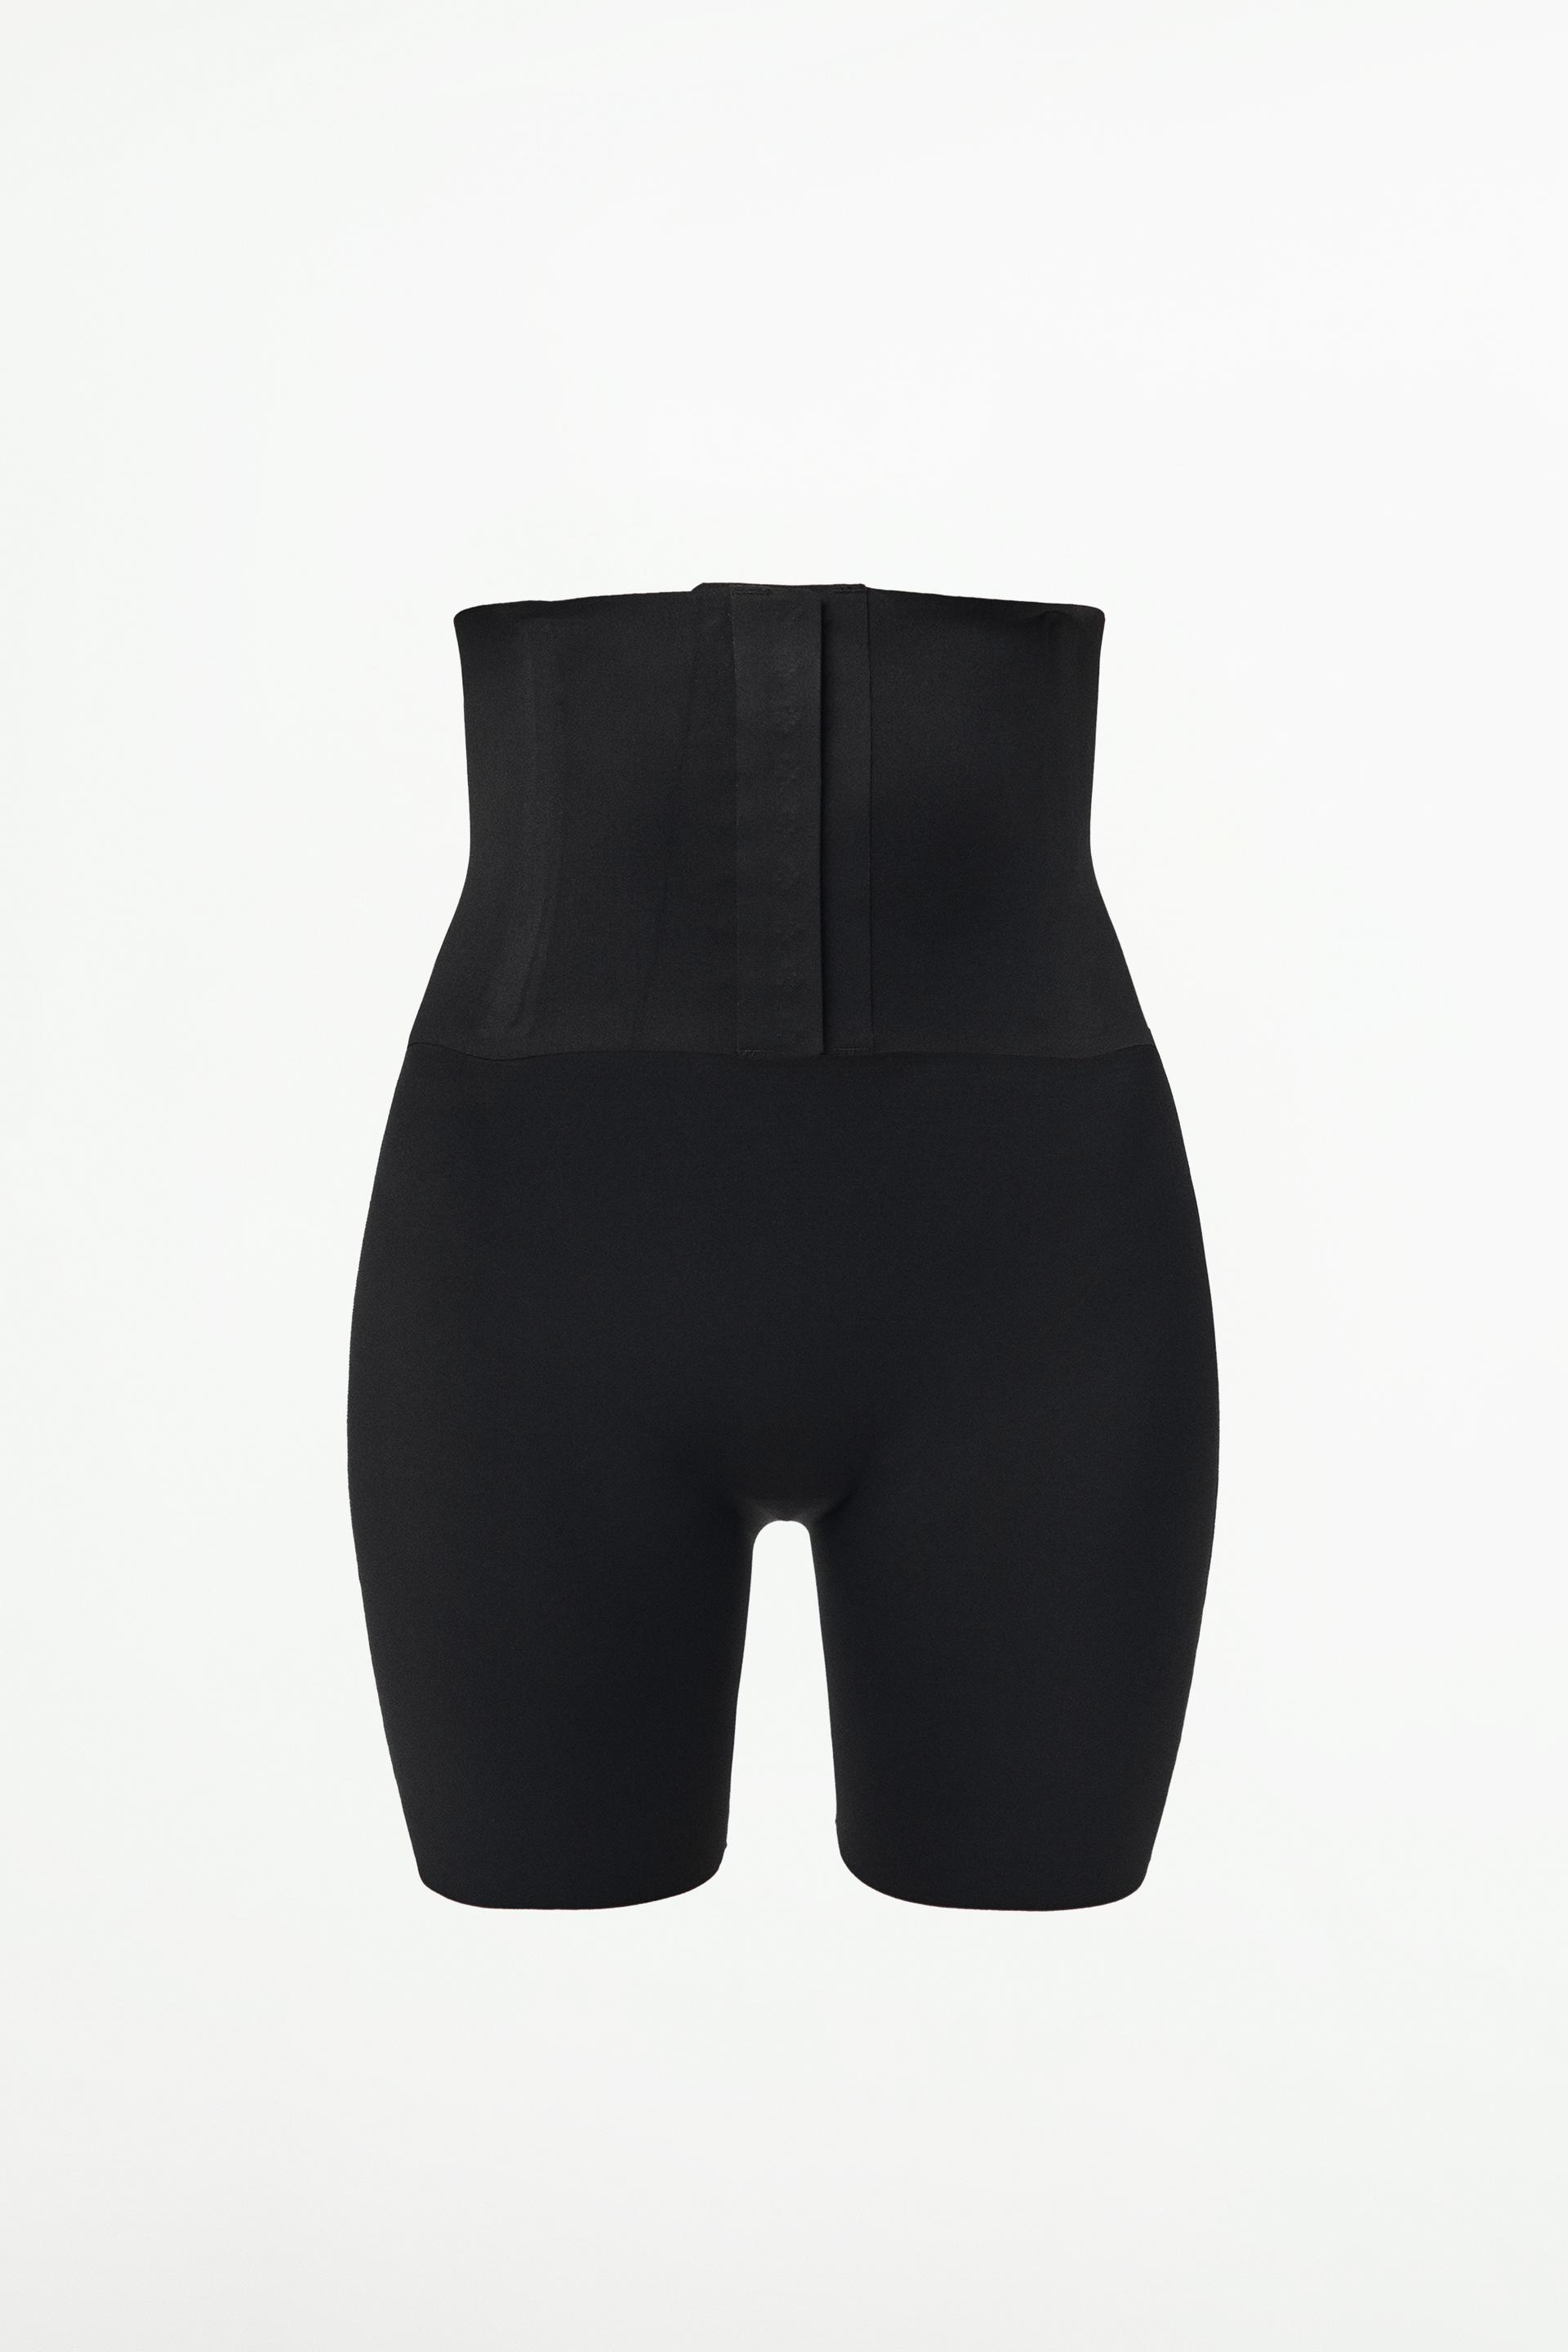 Spanx Tummy Control High-Waisted Shorts, Black, Medium